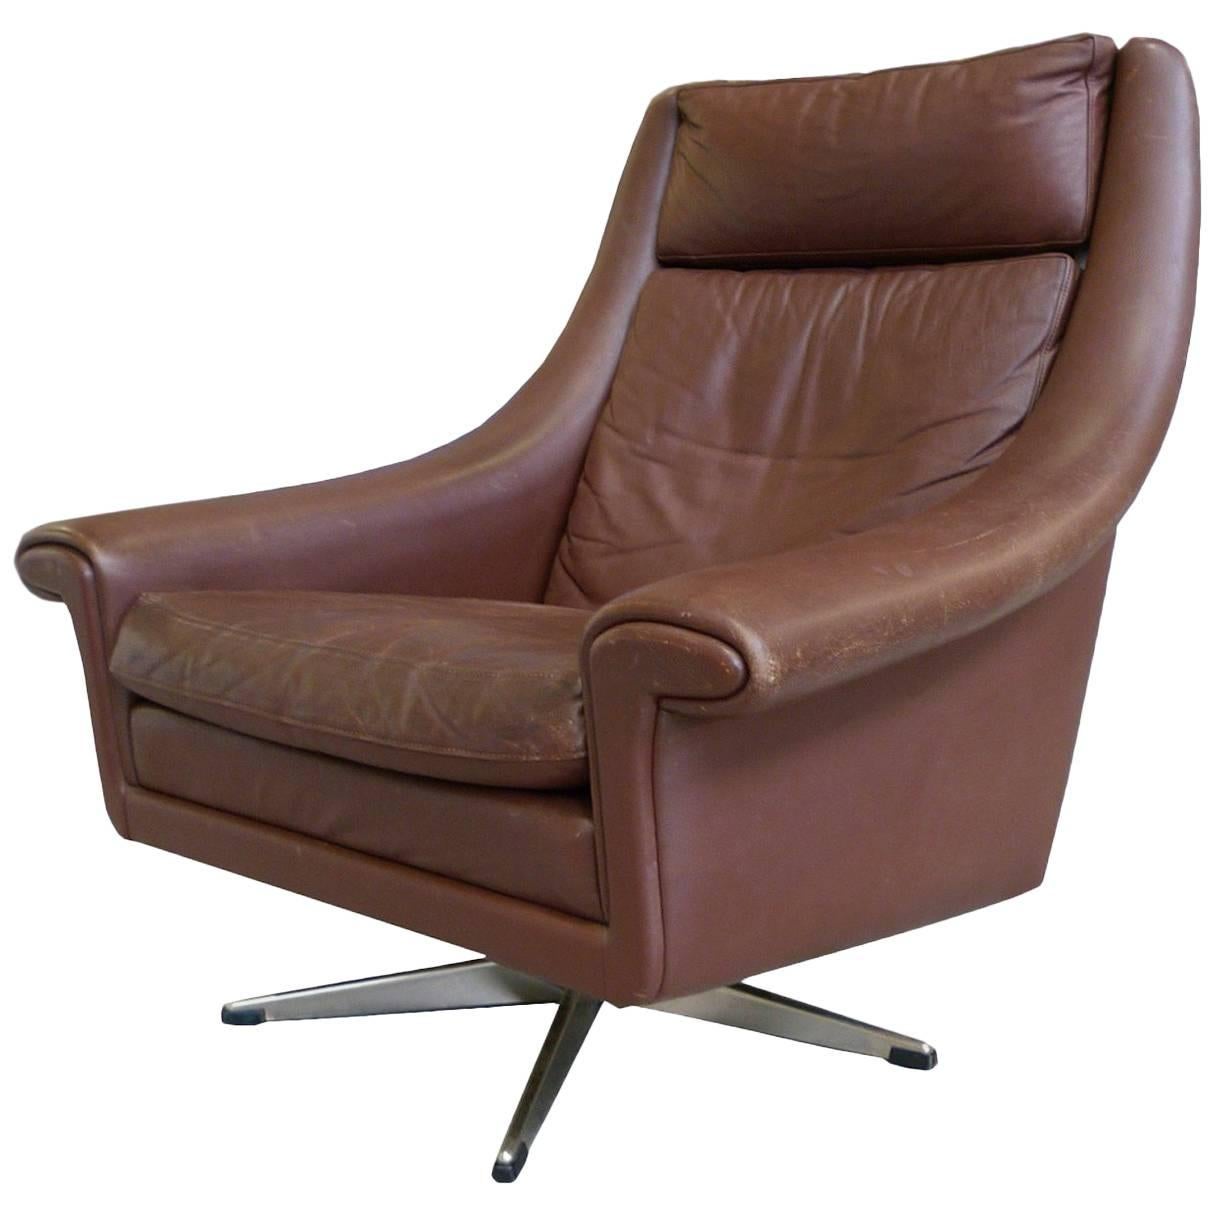 1960s Aage Christensen Model Ambassador Leather Lounge Chair